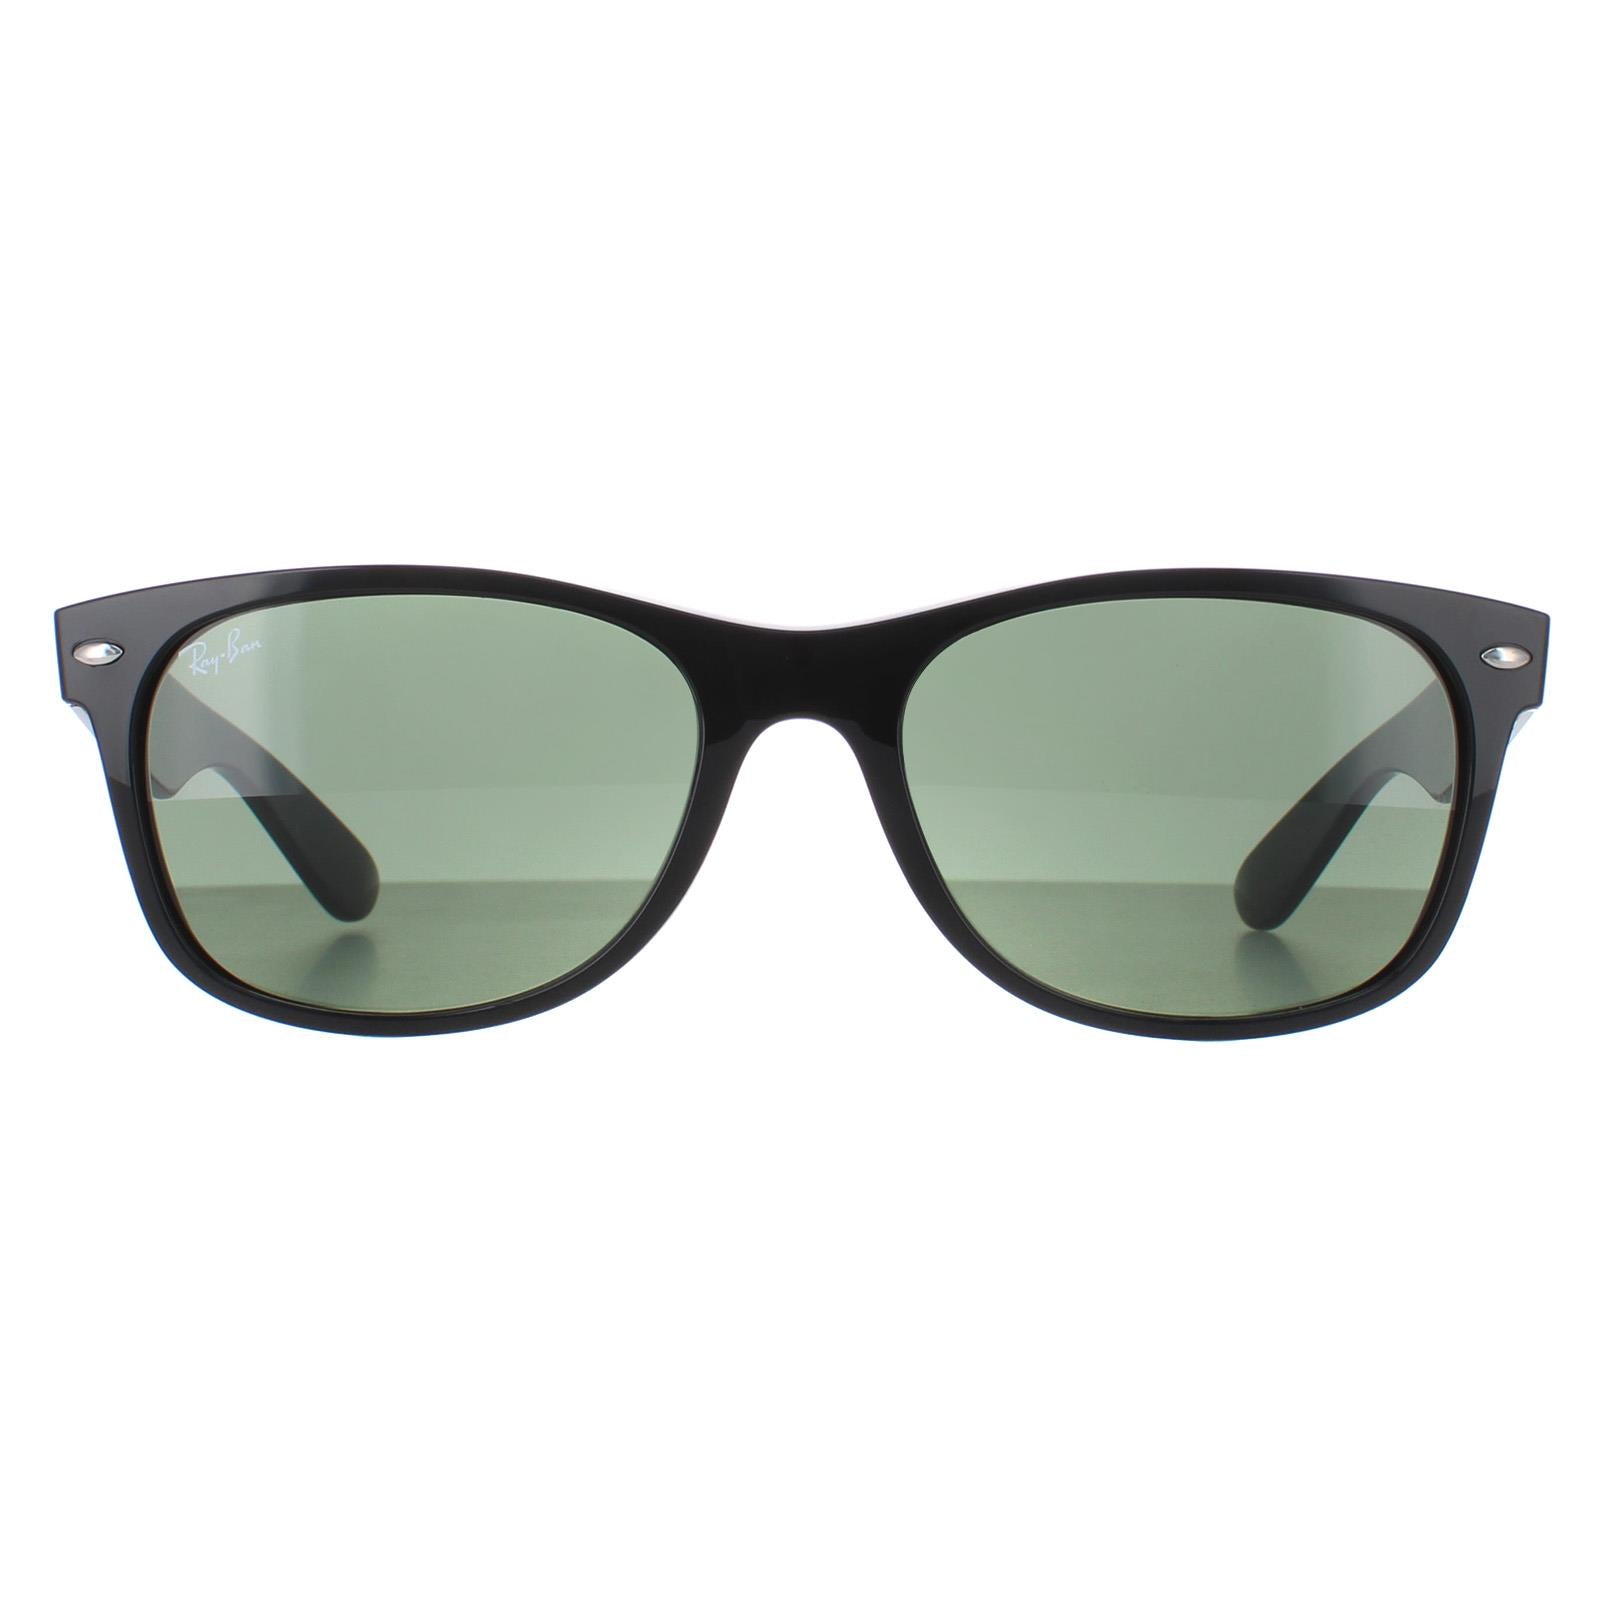 Ray-Ban Original Wayfarer Sunglasses Tortoise/Crystal Green at